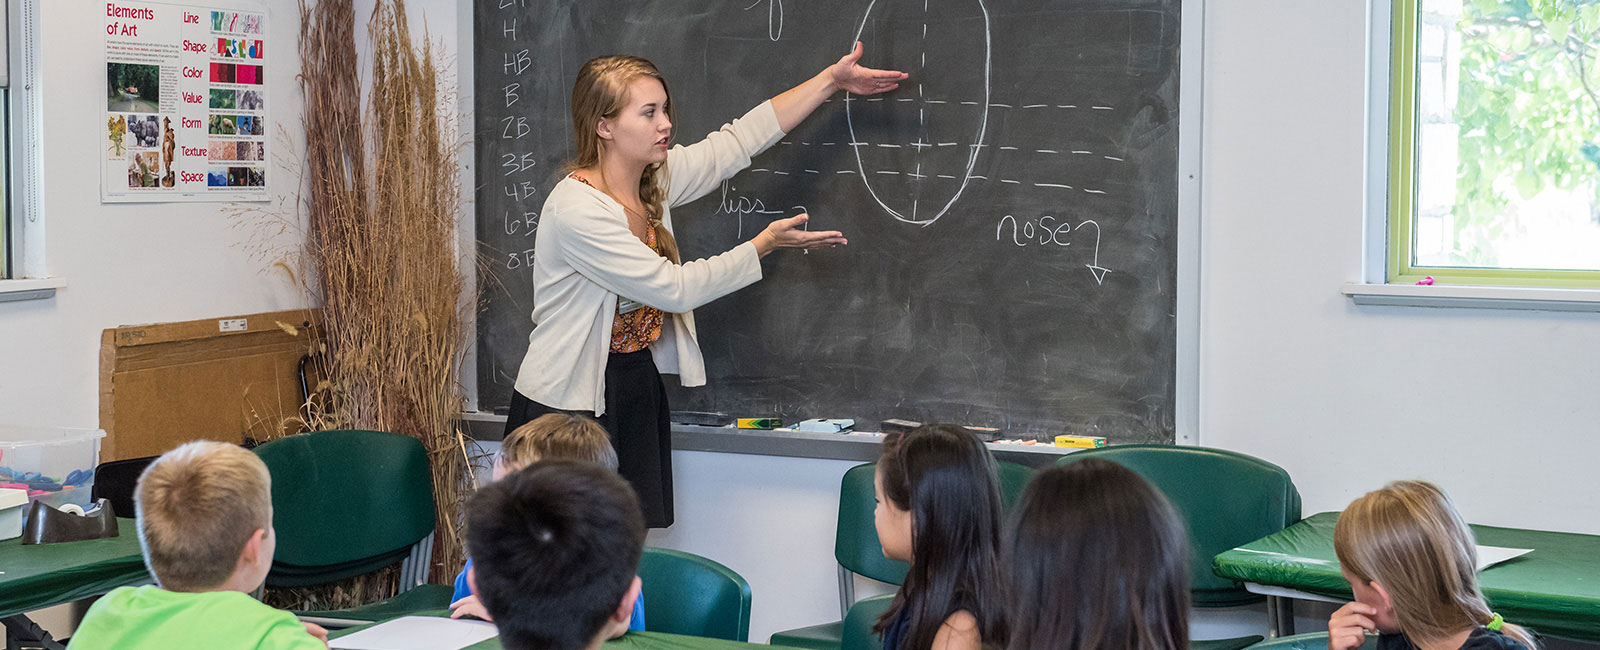 A teacher instructing children at a blackboard